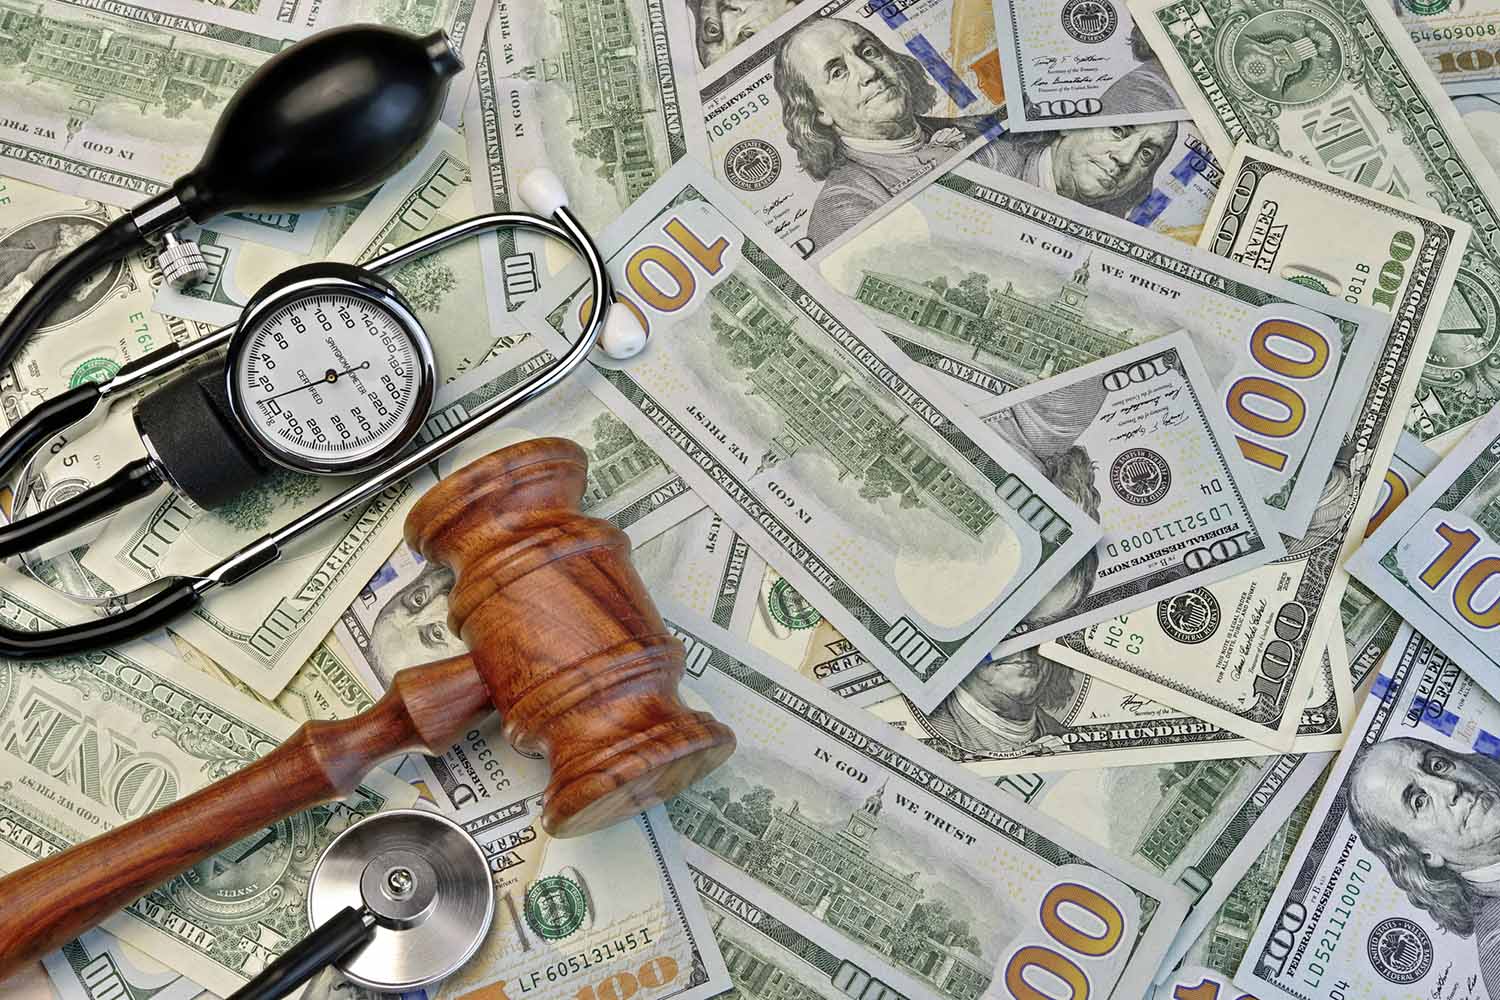 Judges Gavel And Medical Tools On Dollar Cash Background